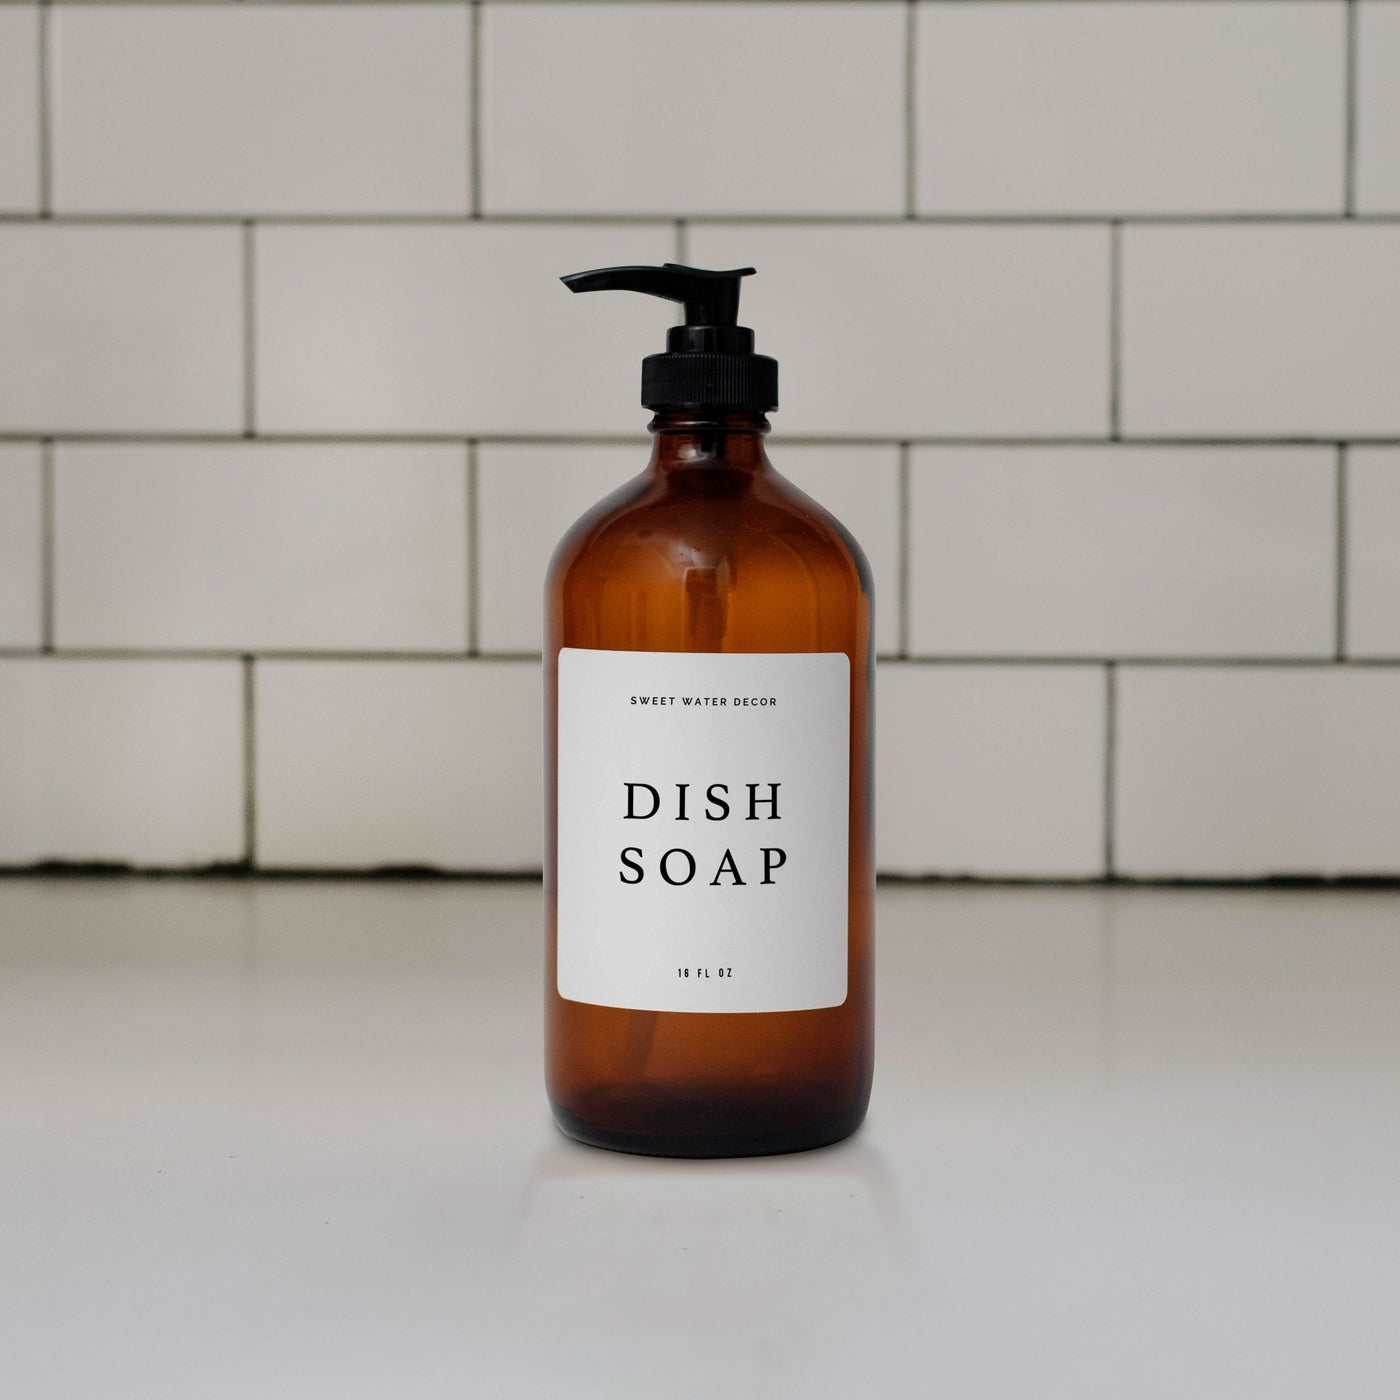 16oz Amber Glass Dish Soap Dispenser - White Text Label - Sweet Water Decor - Dispensers